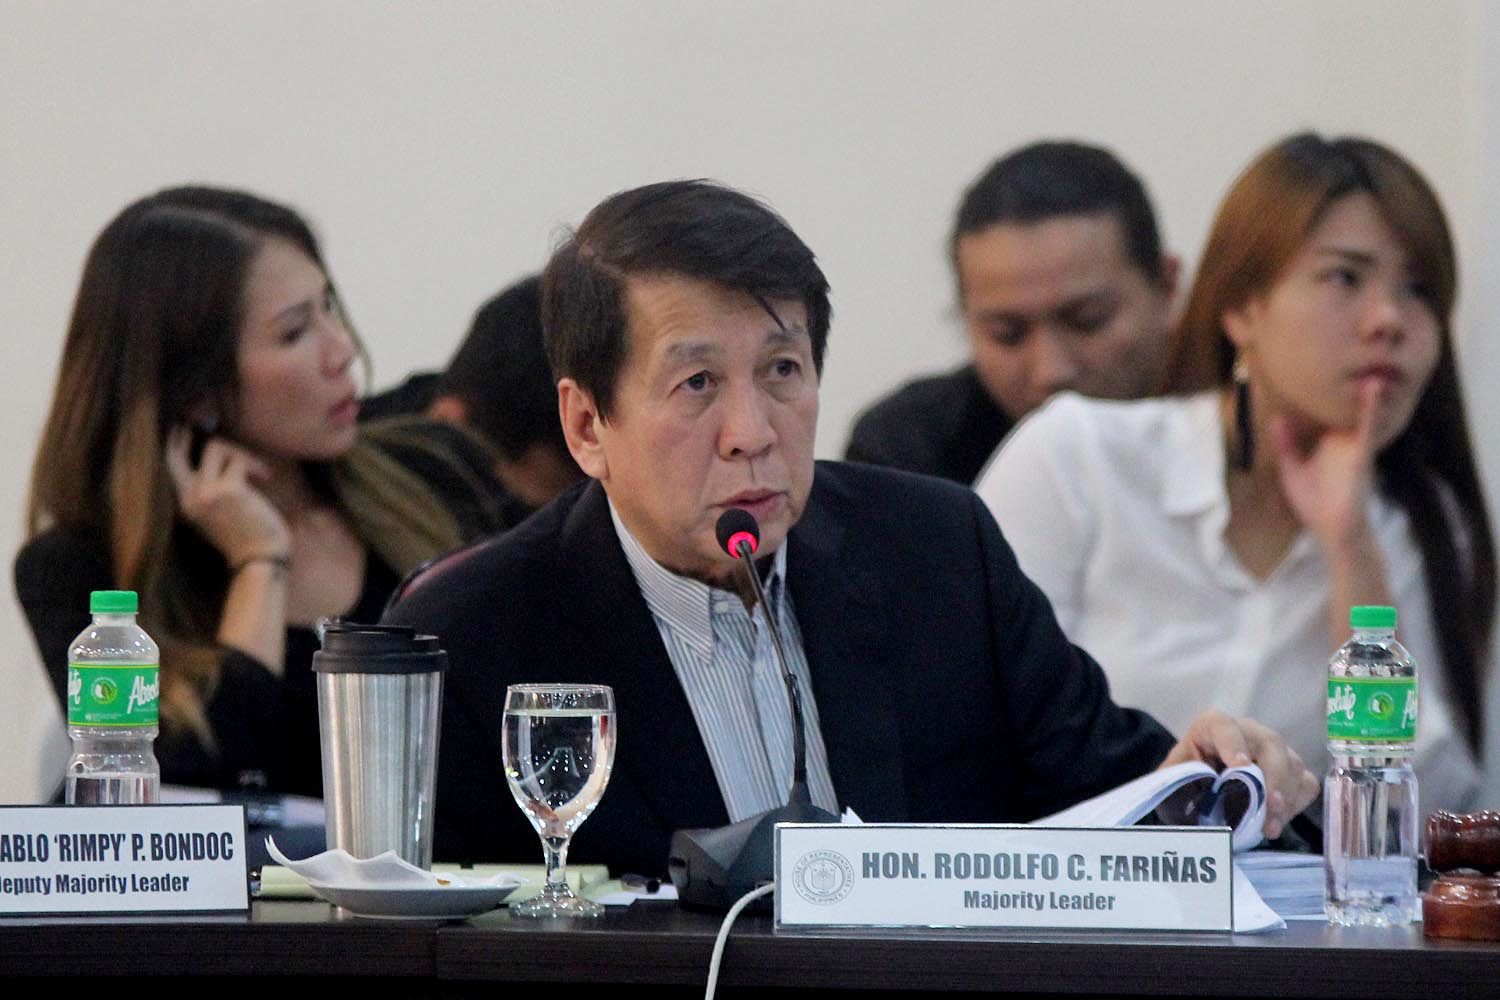 Imee Marcos, Ilocos Norte officials apologize to Fariñas over resolutions